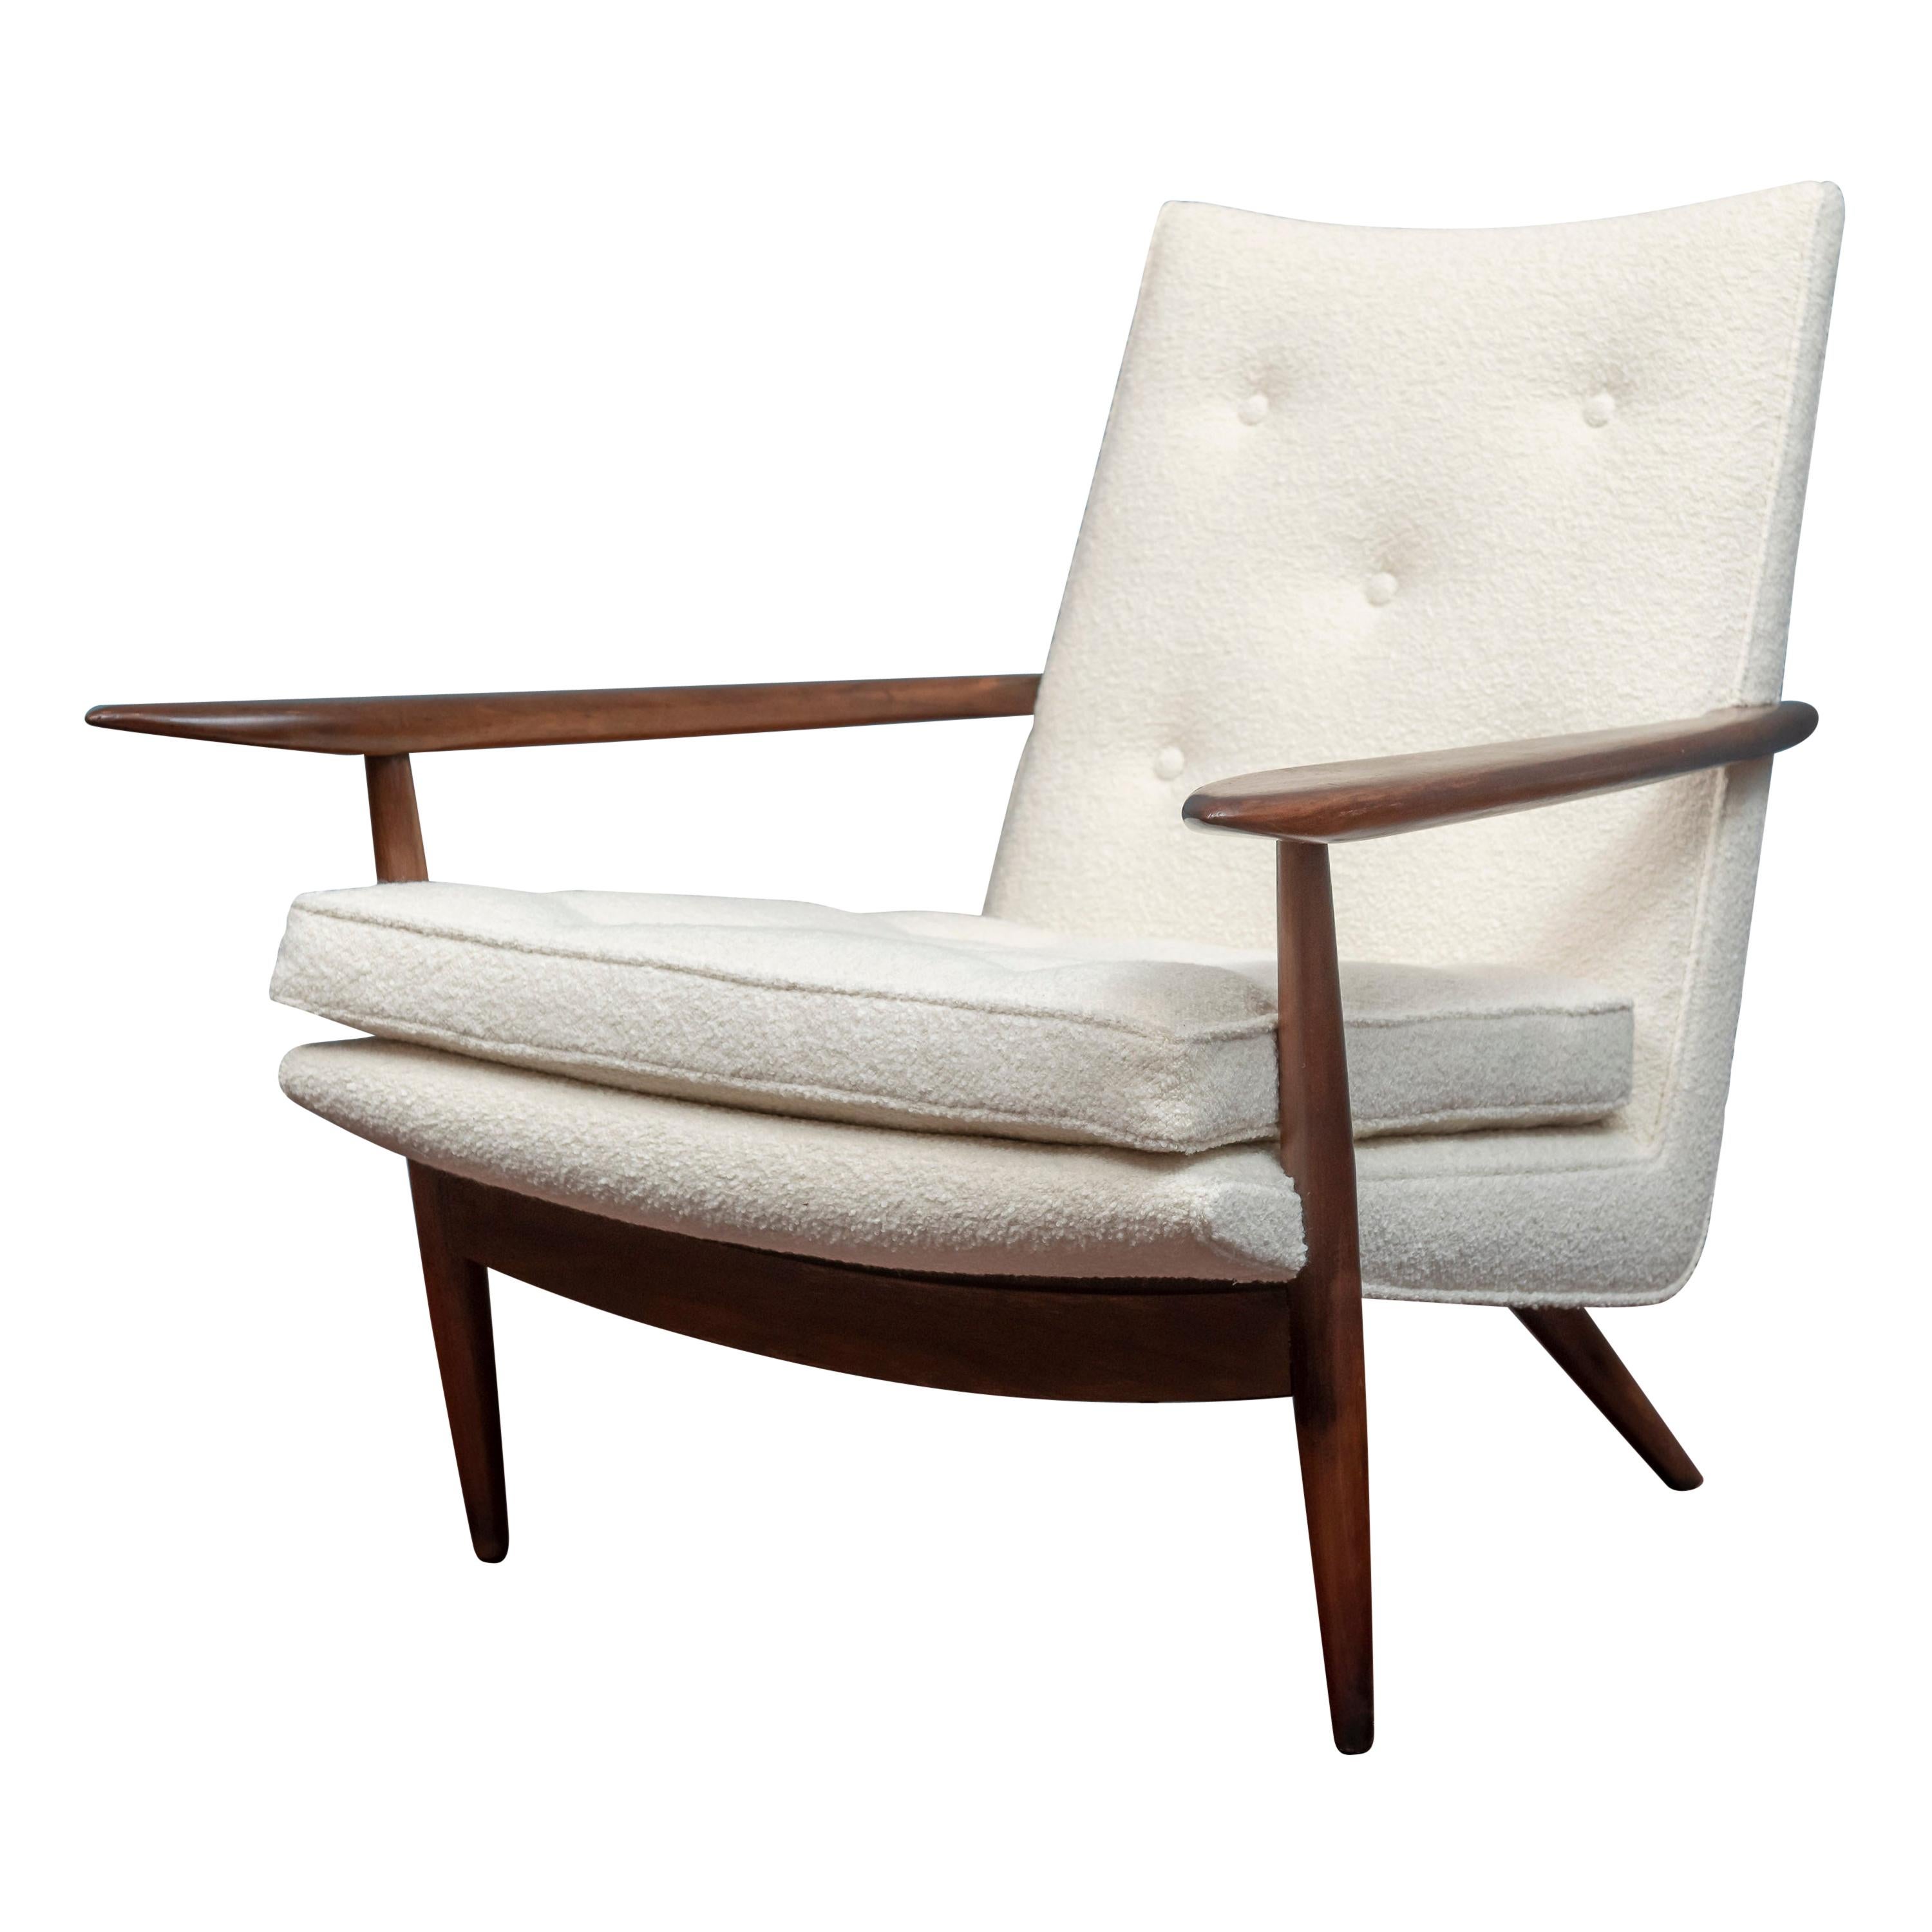 George Nakashima "Origins" Lounge Chair